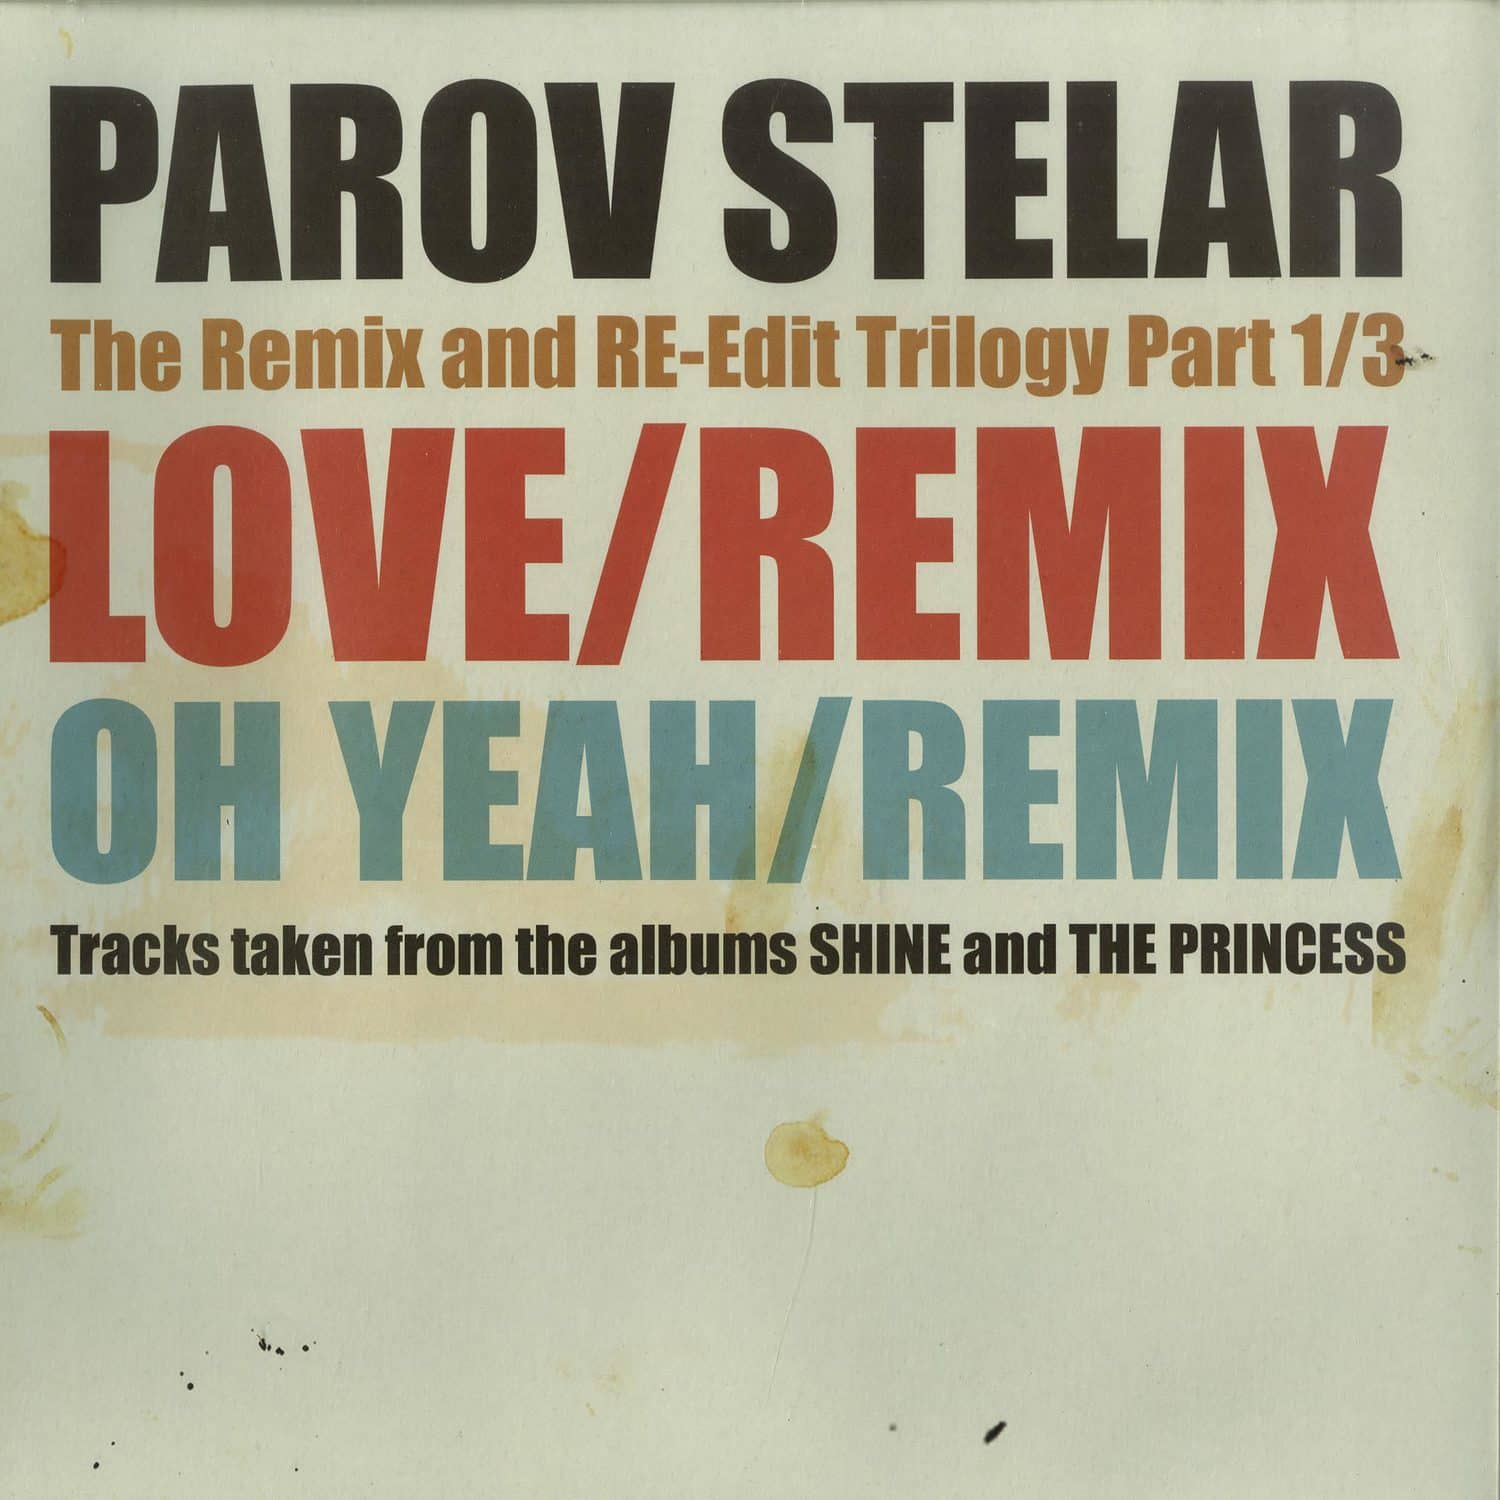 Parov Stelar - THE REMIX AND RE-EDIT TRILOGY PART 1/3